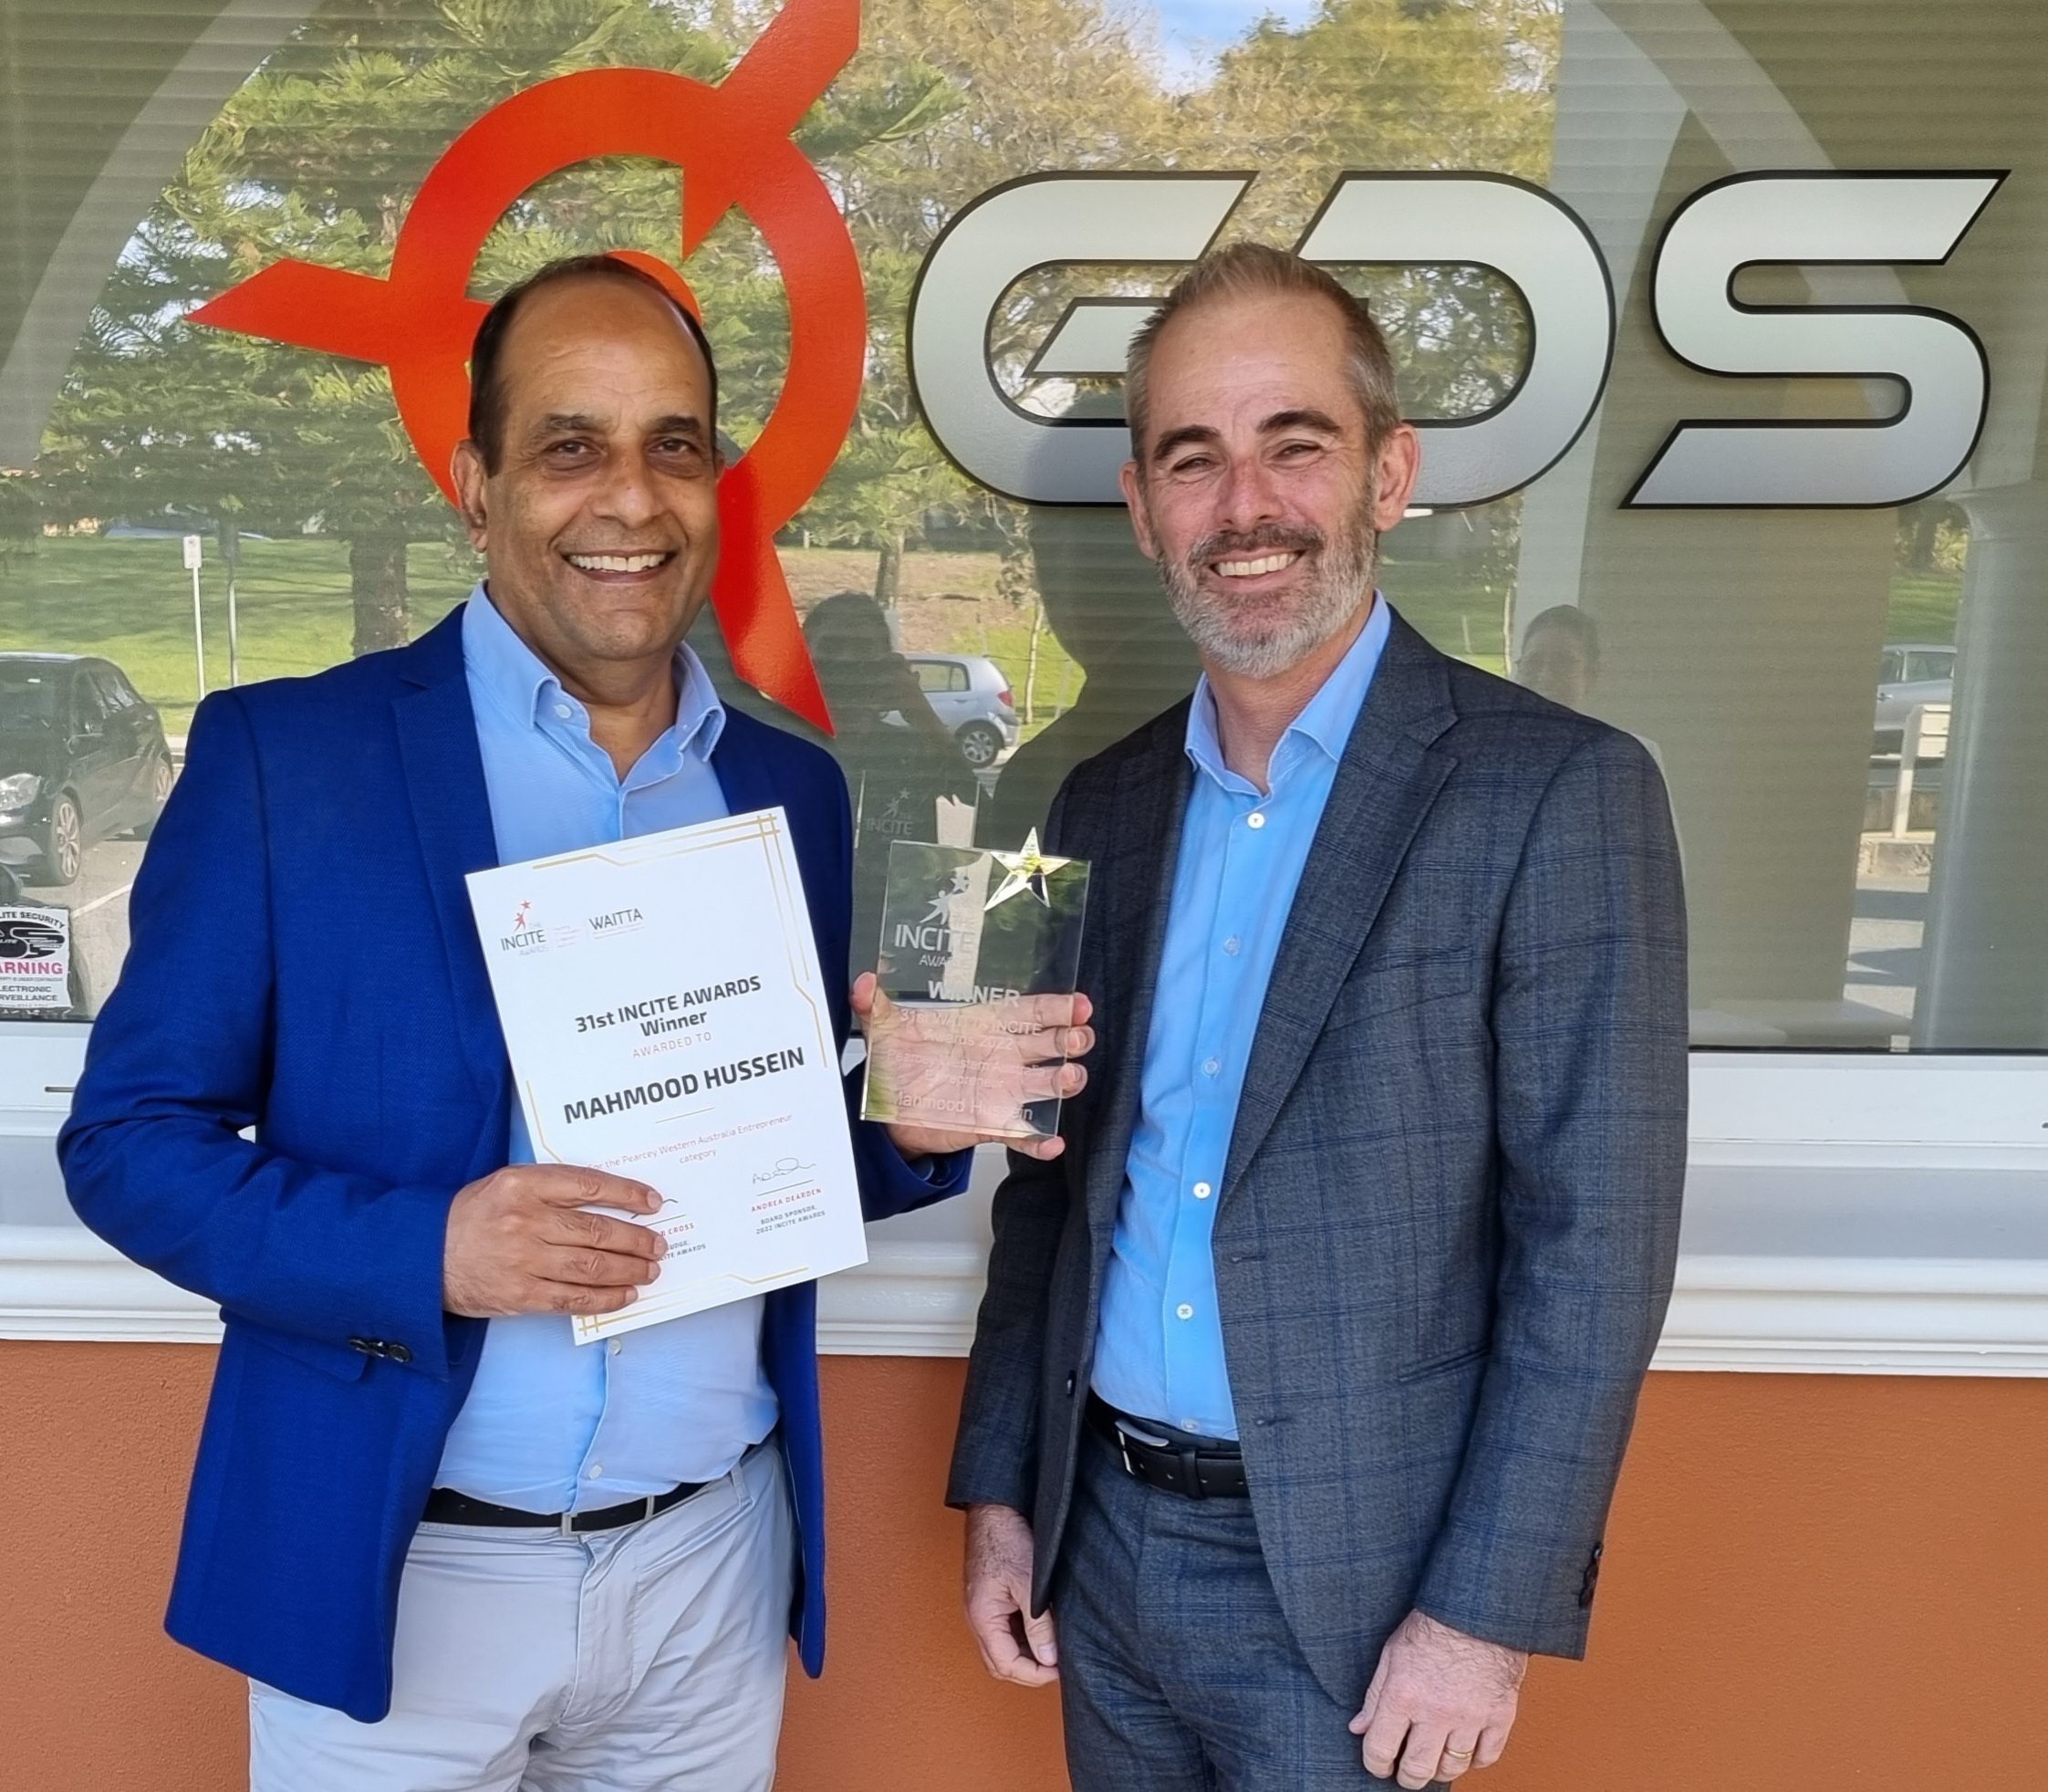 Global Drone Solutions’ Mahmood Hussein ‘Top Gun’ in Western Australian Pearcey Awards